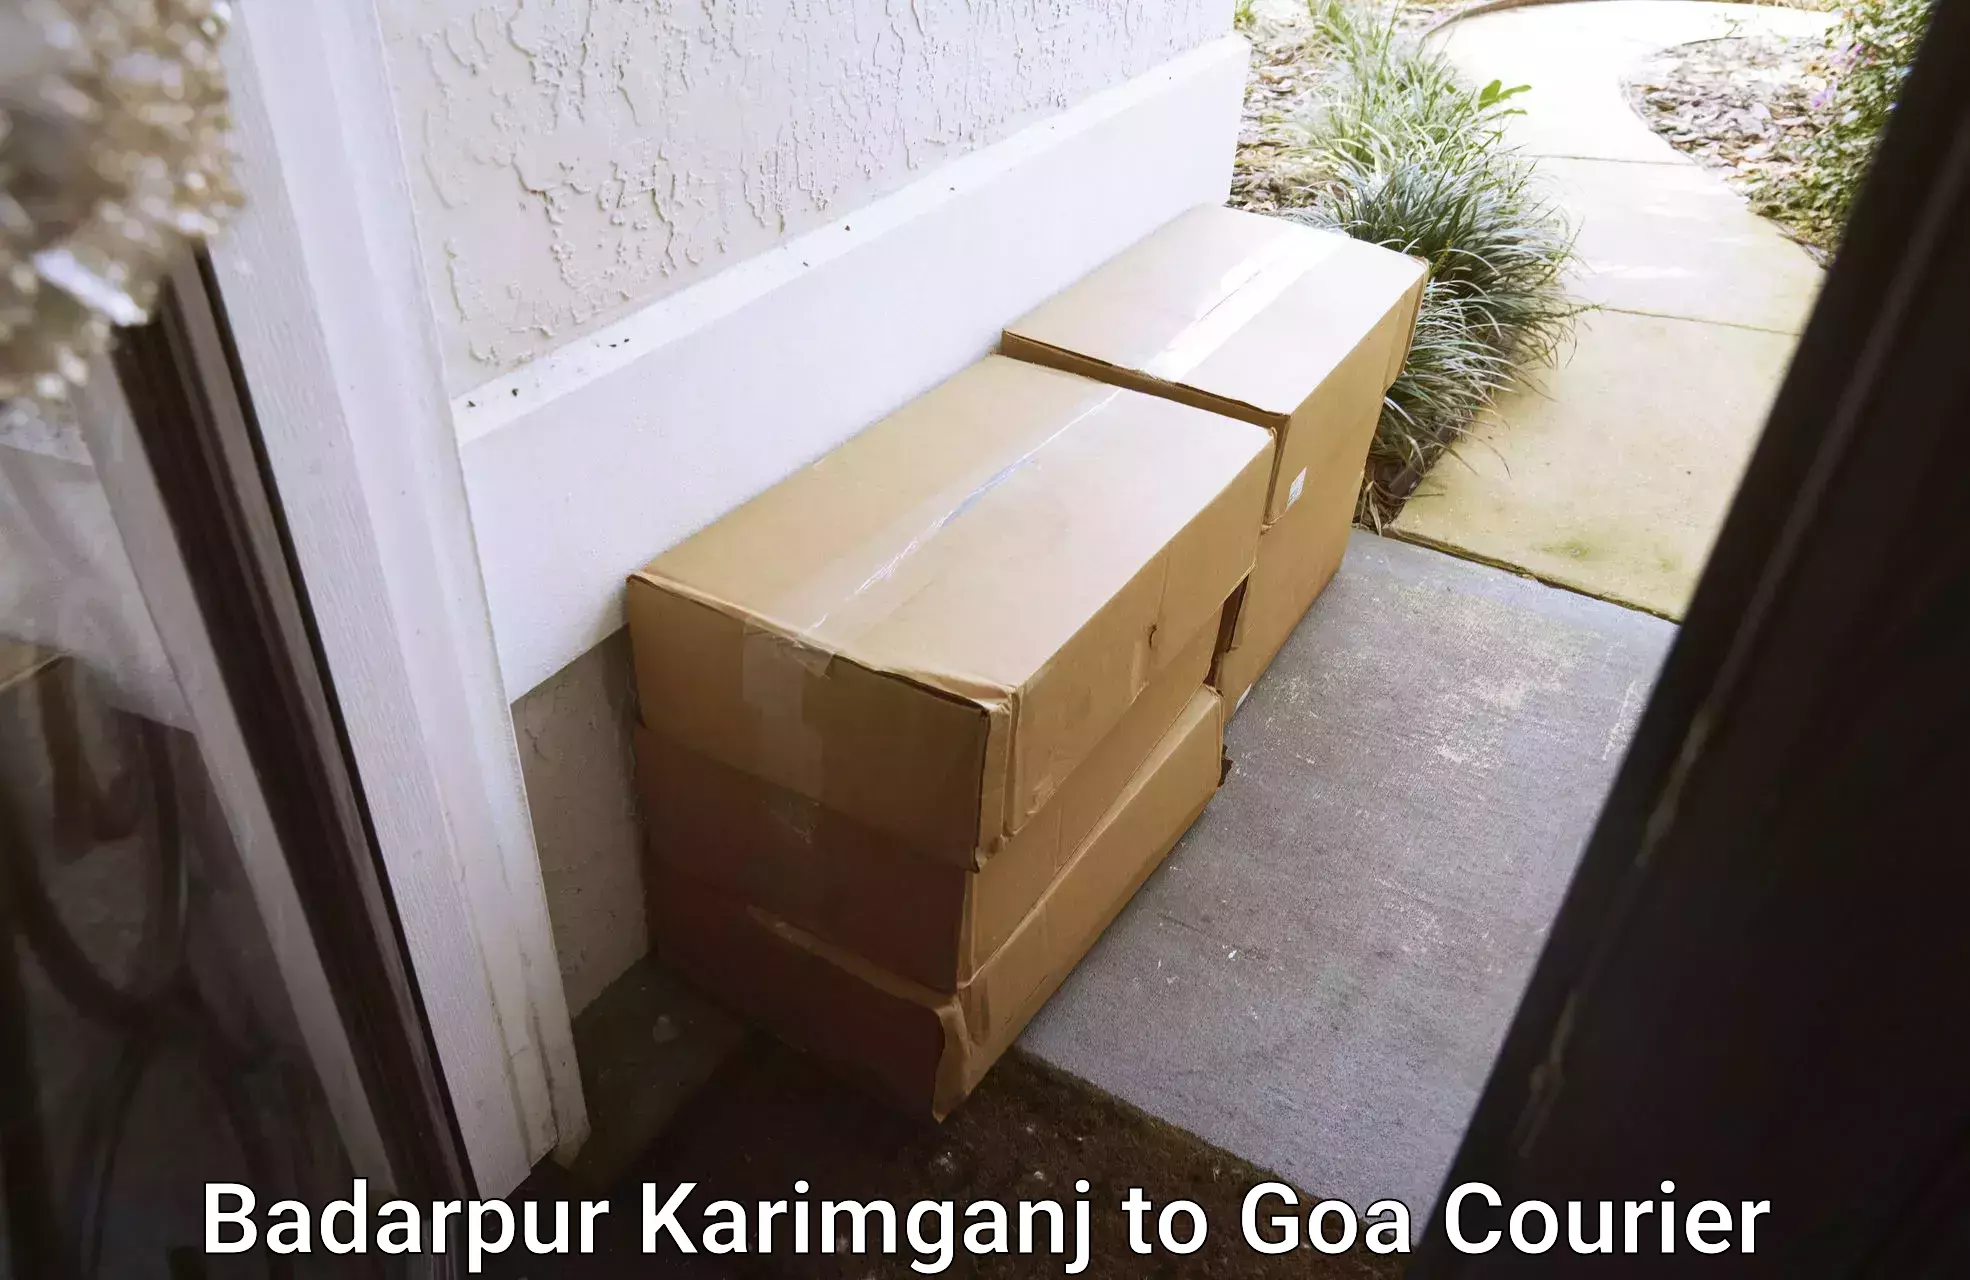 Delivery service partnership Badarpur Karimganj to Goa